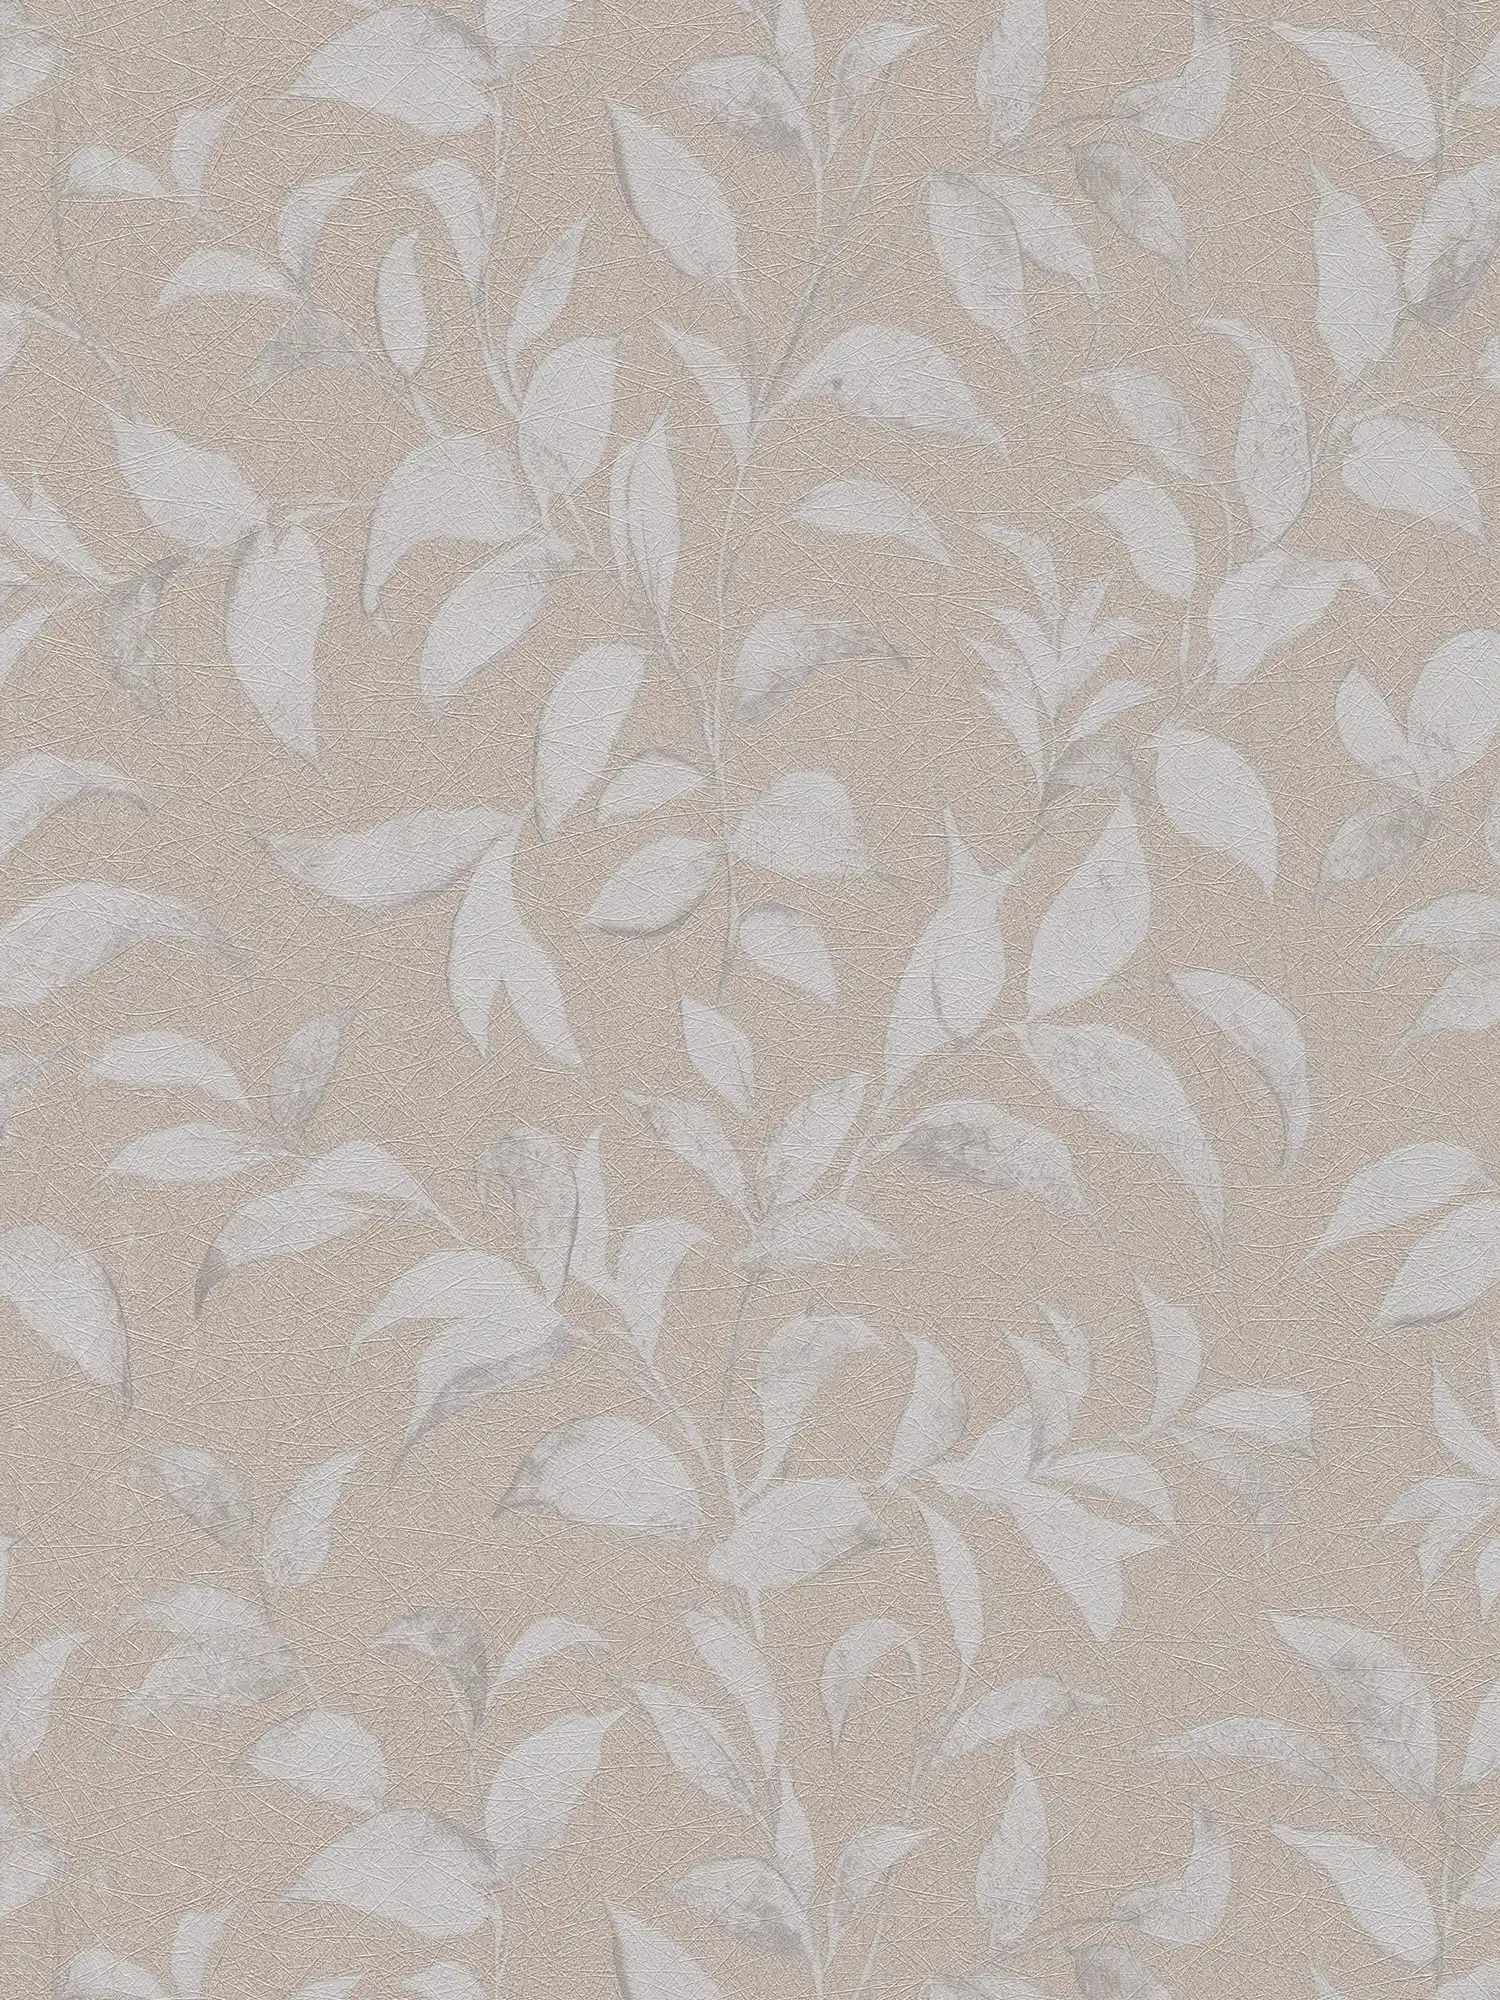 Florale Blätter-Tapete schimmernd strukturiert – Grau, Silber
